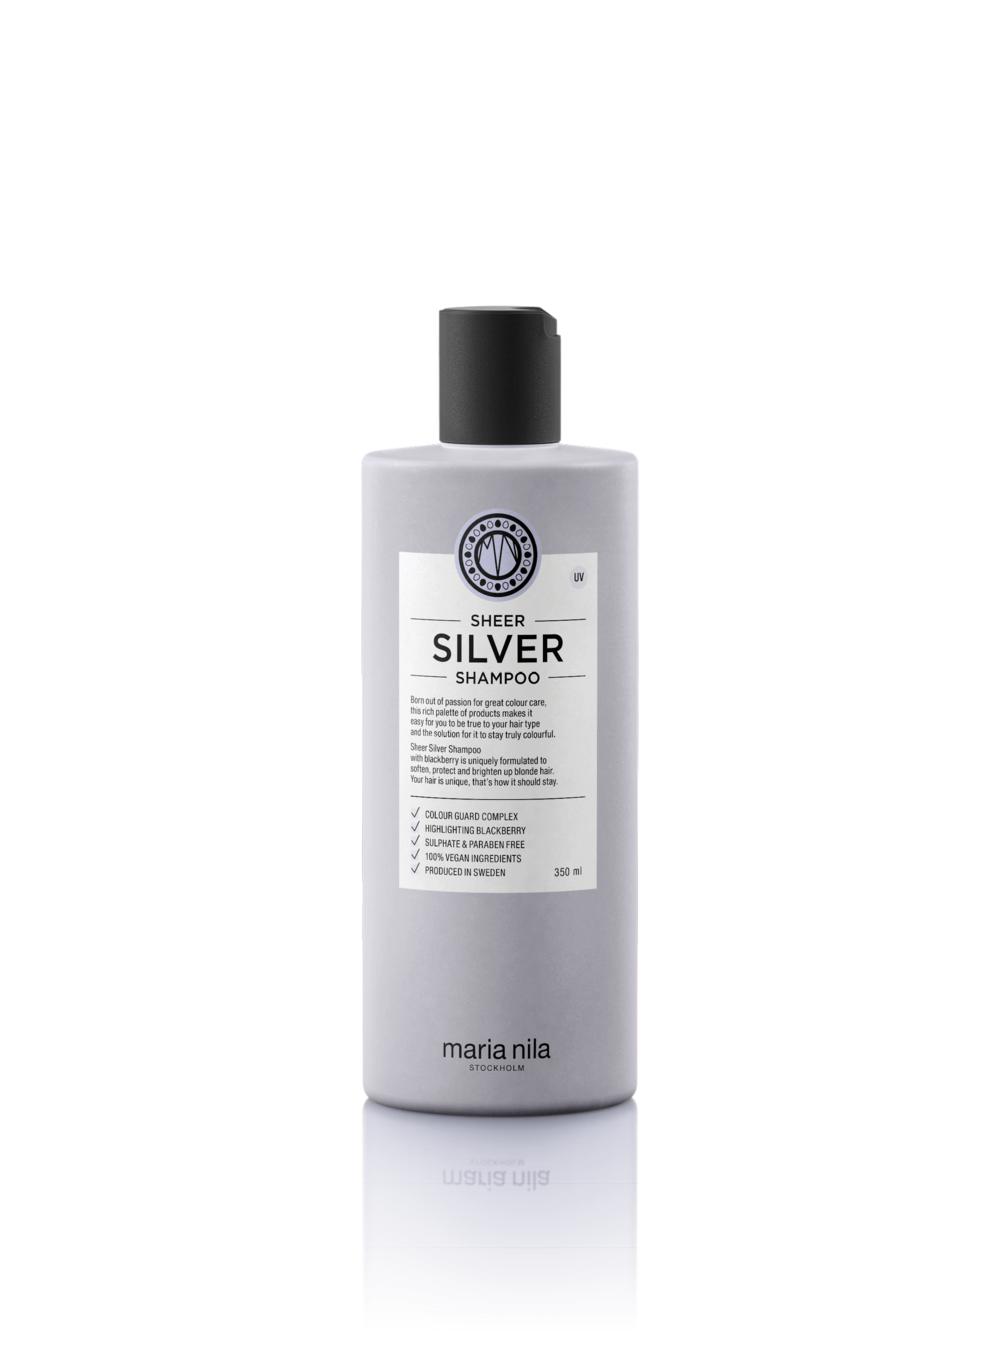 sagging Windswept Læne Maria Nila Sheer Silver Shampoo, 350 ml — Kliim Coiffure